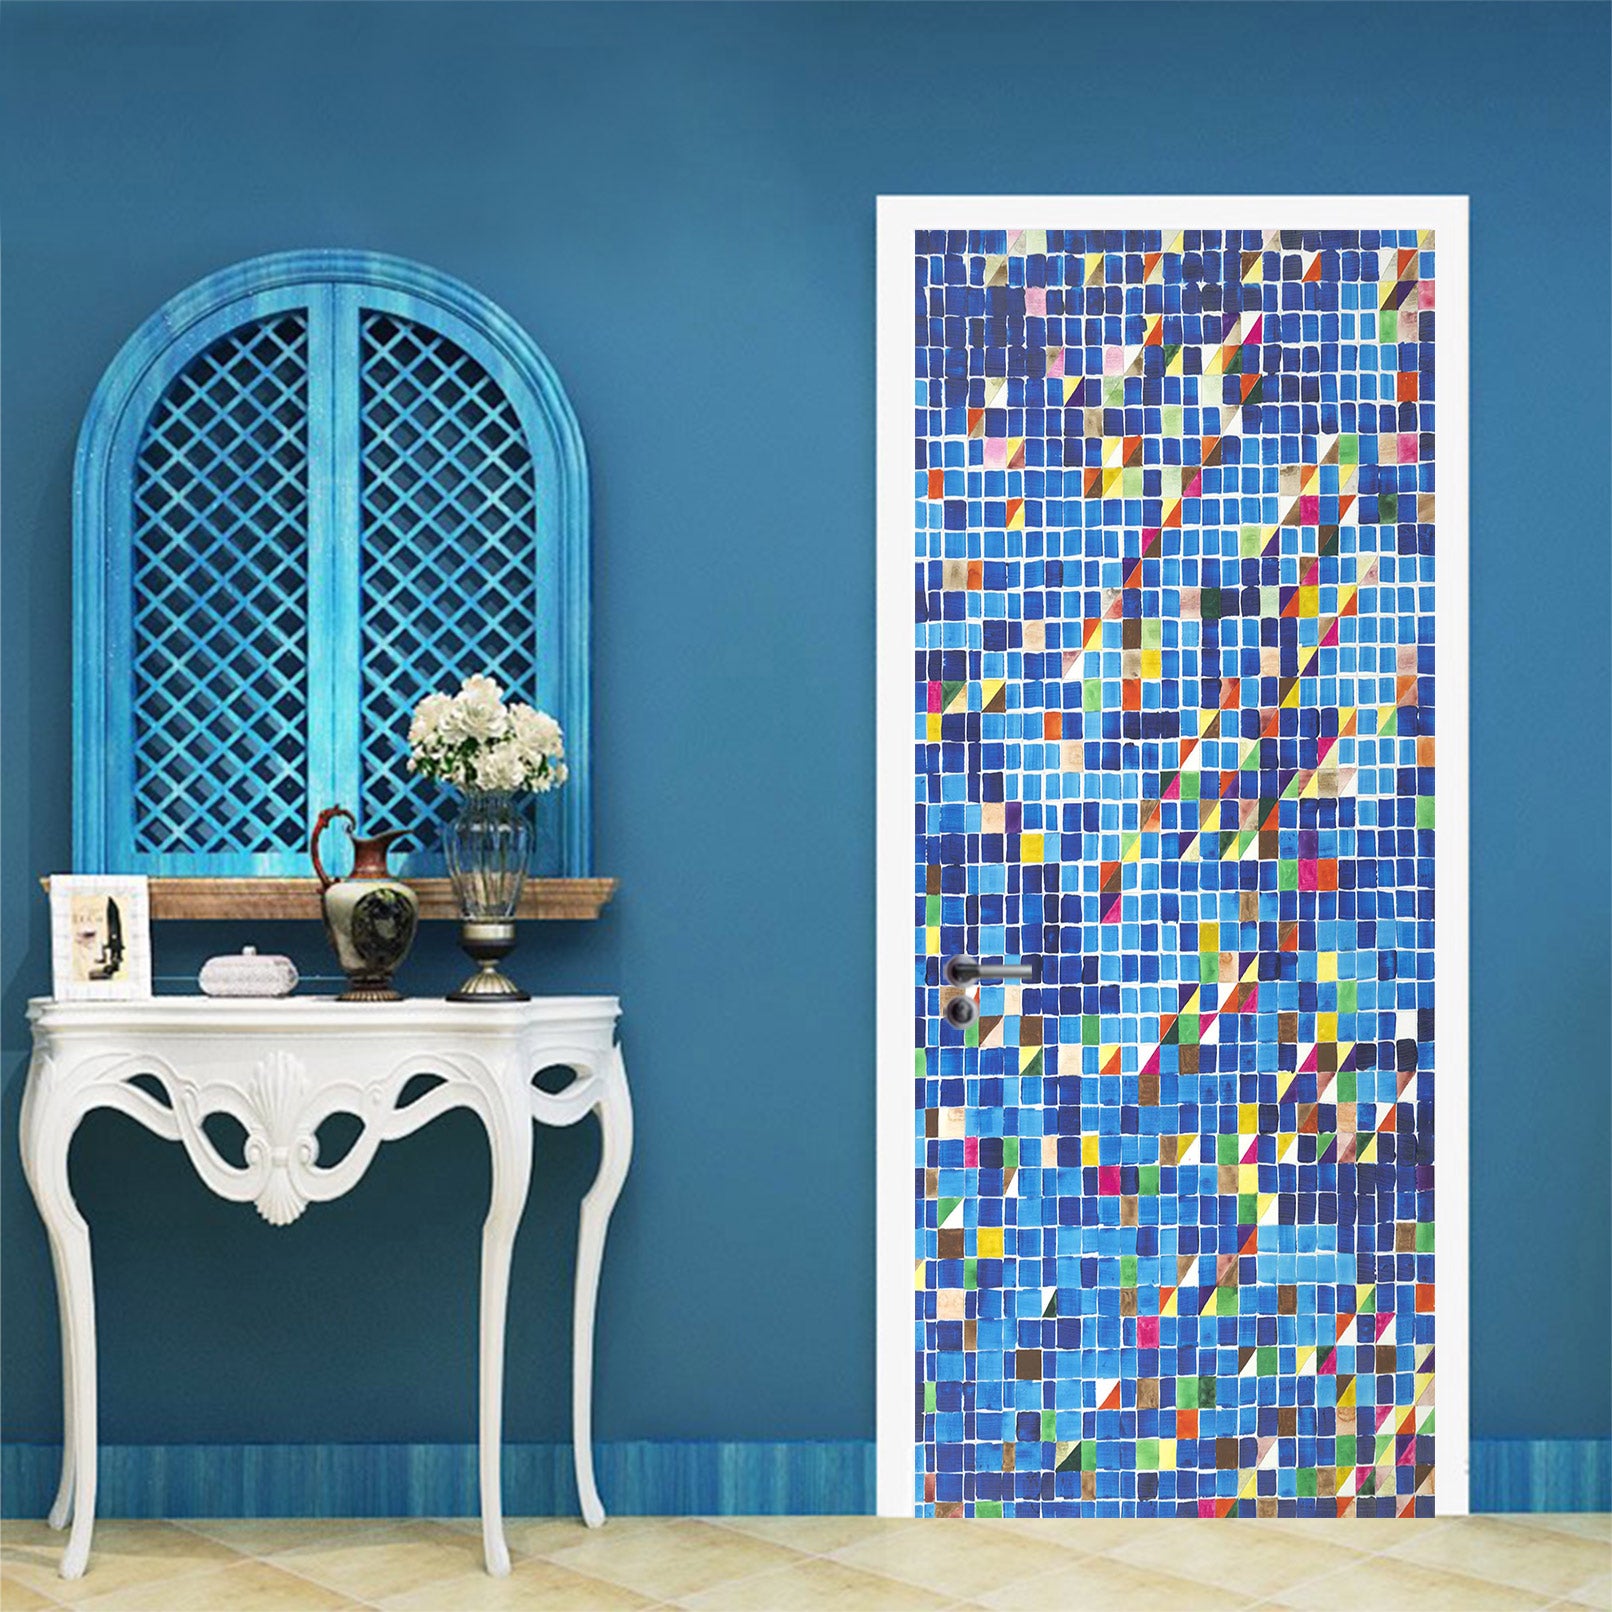 3D Blue Colored Mosaic Tiles 93223 Allan P. Friedlander Door Mural